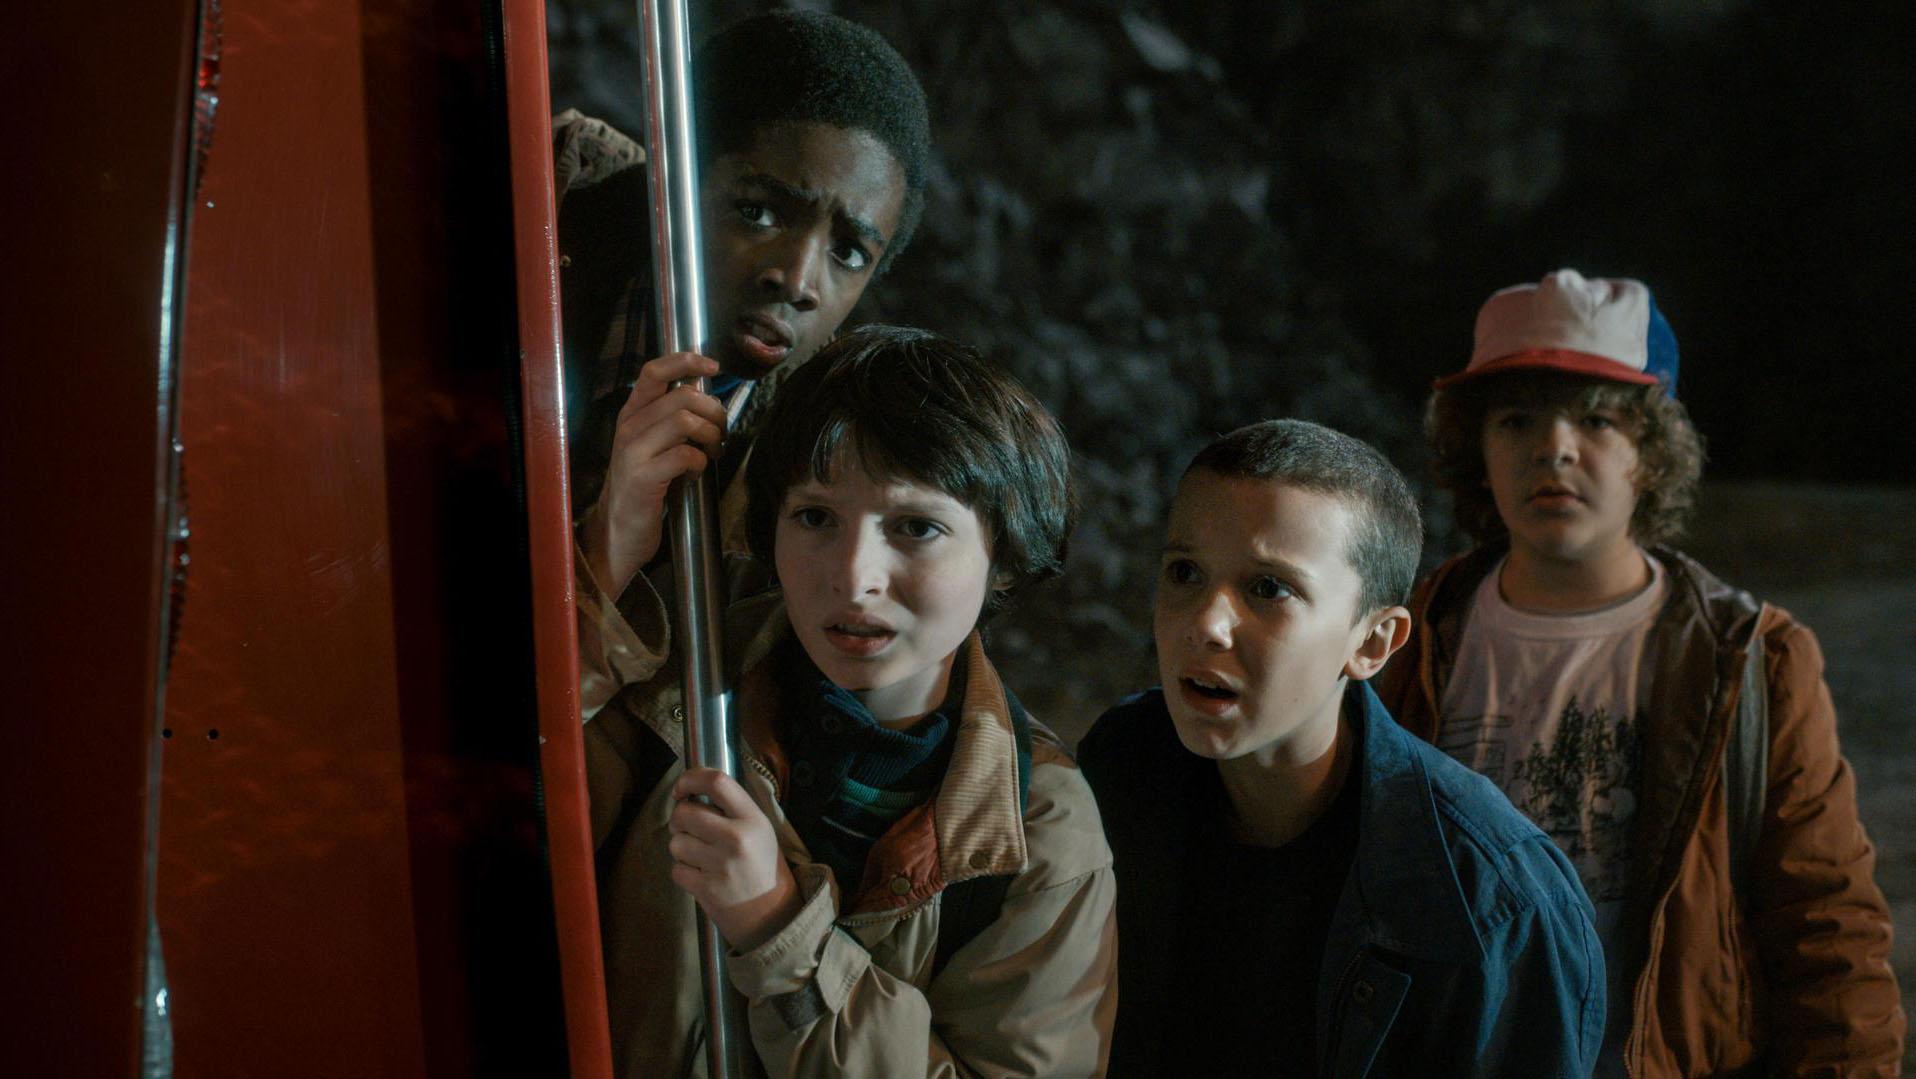 Review: Netflix original ‘Stranger Things’ mirrors ’80s tropes